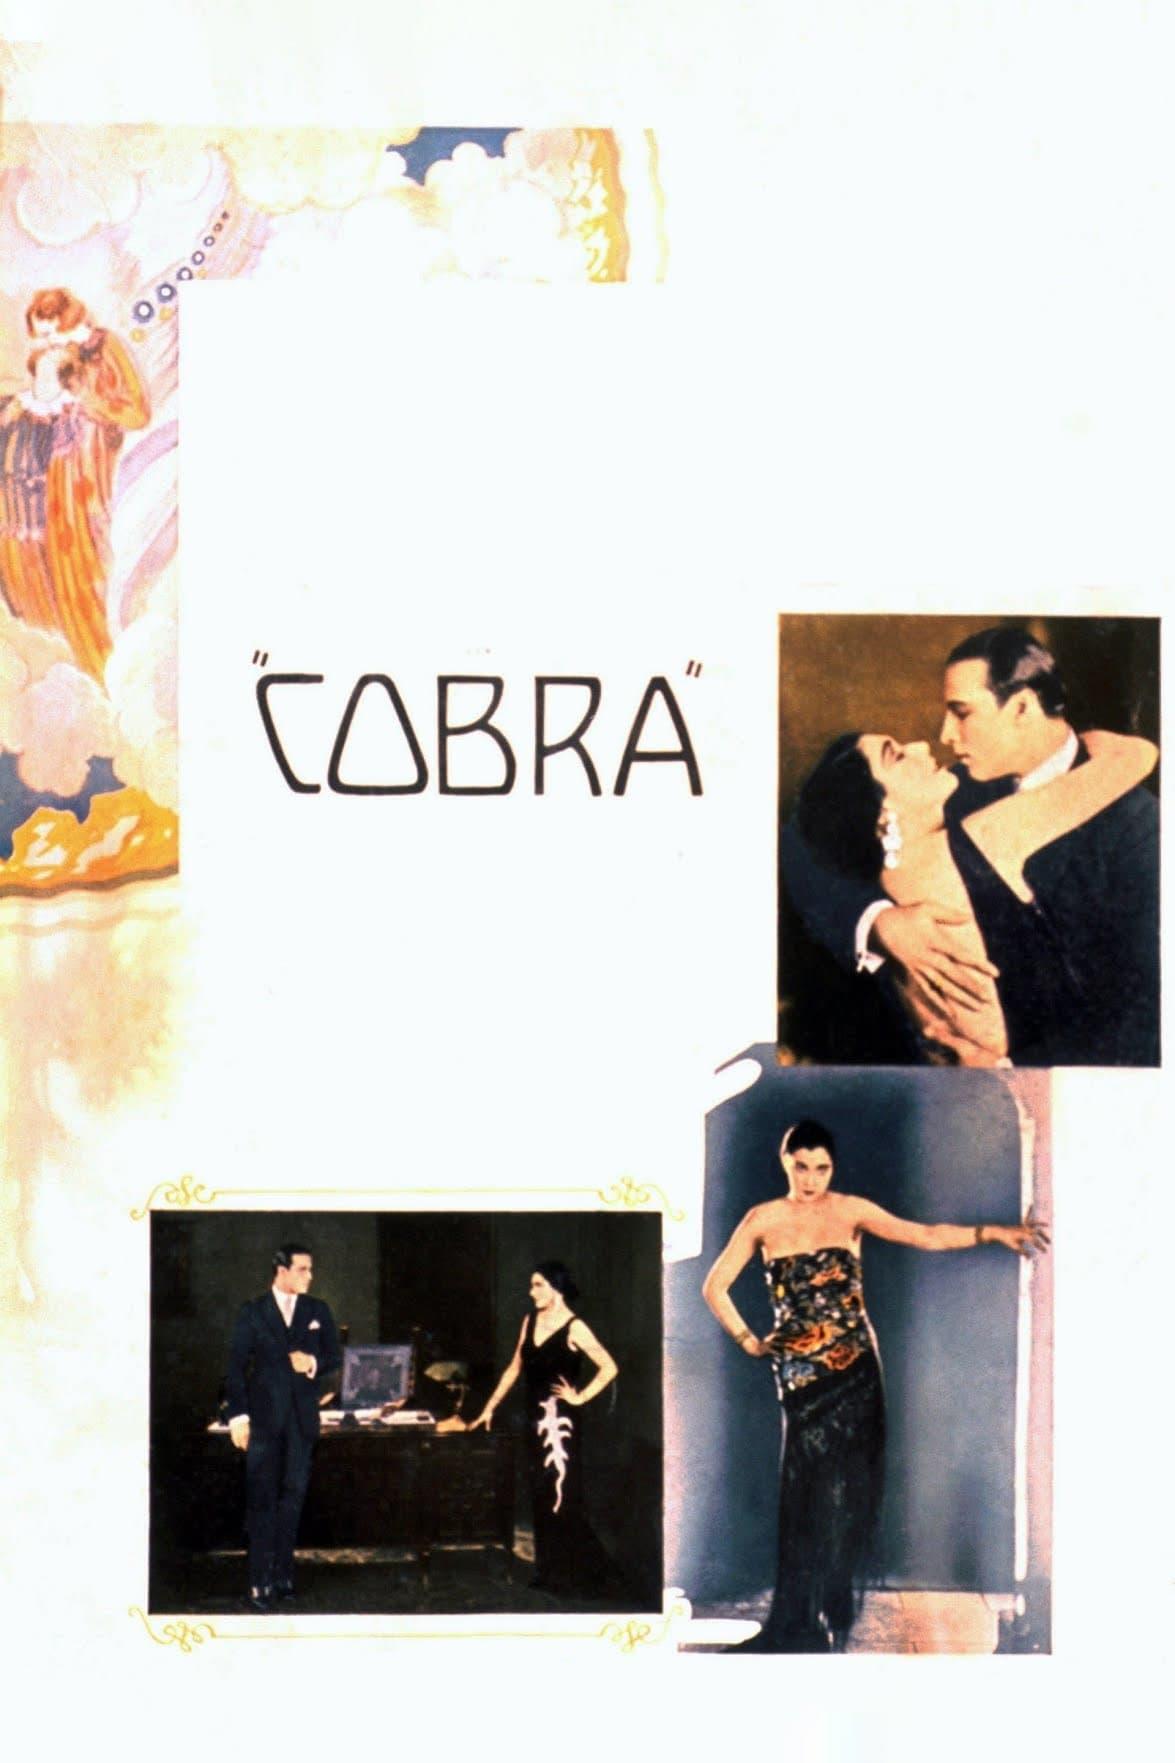 Cobra poster